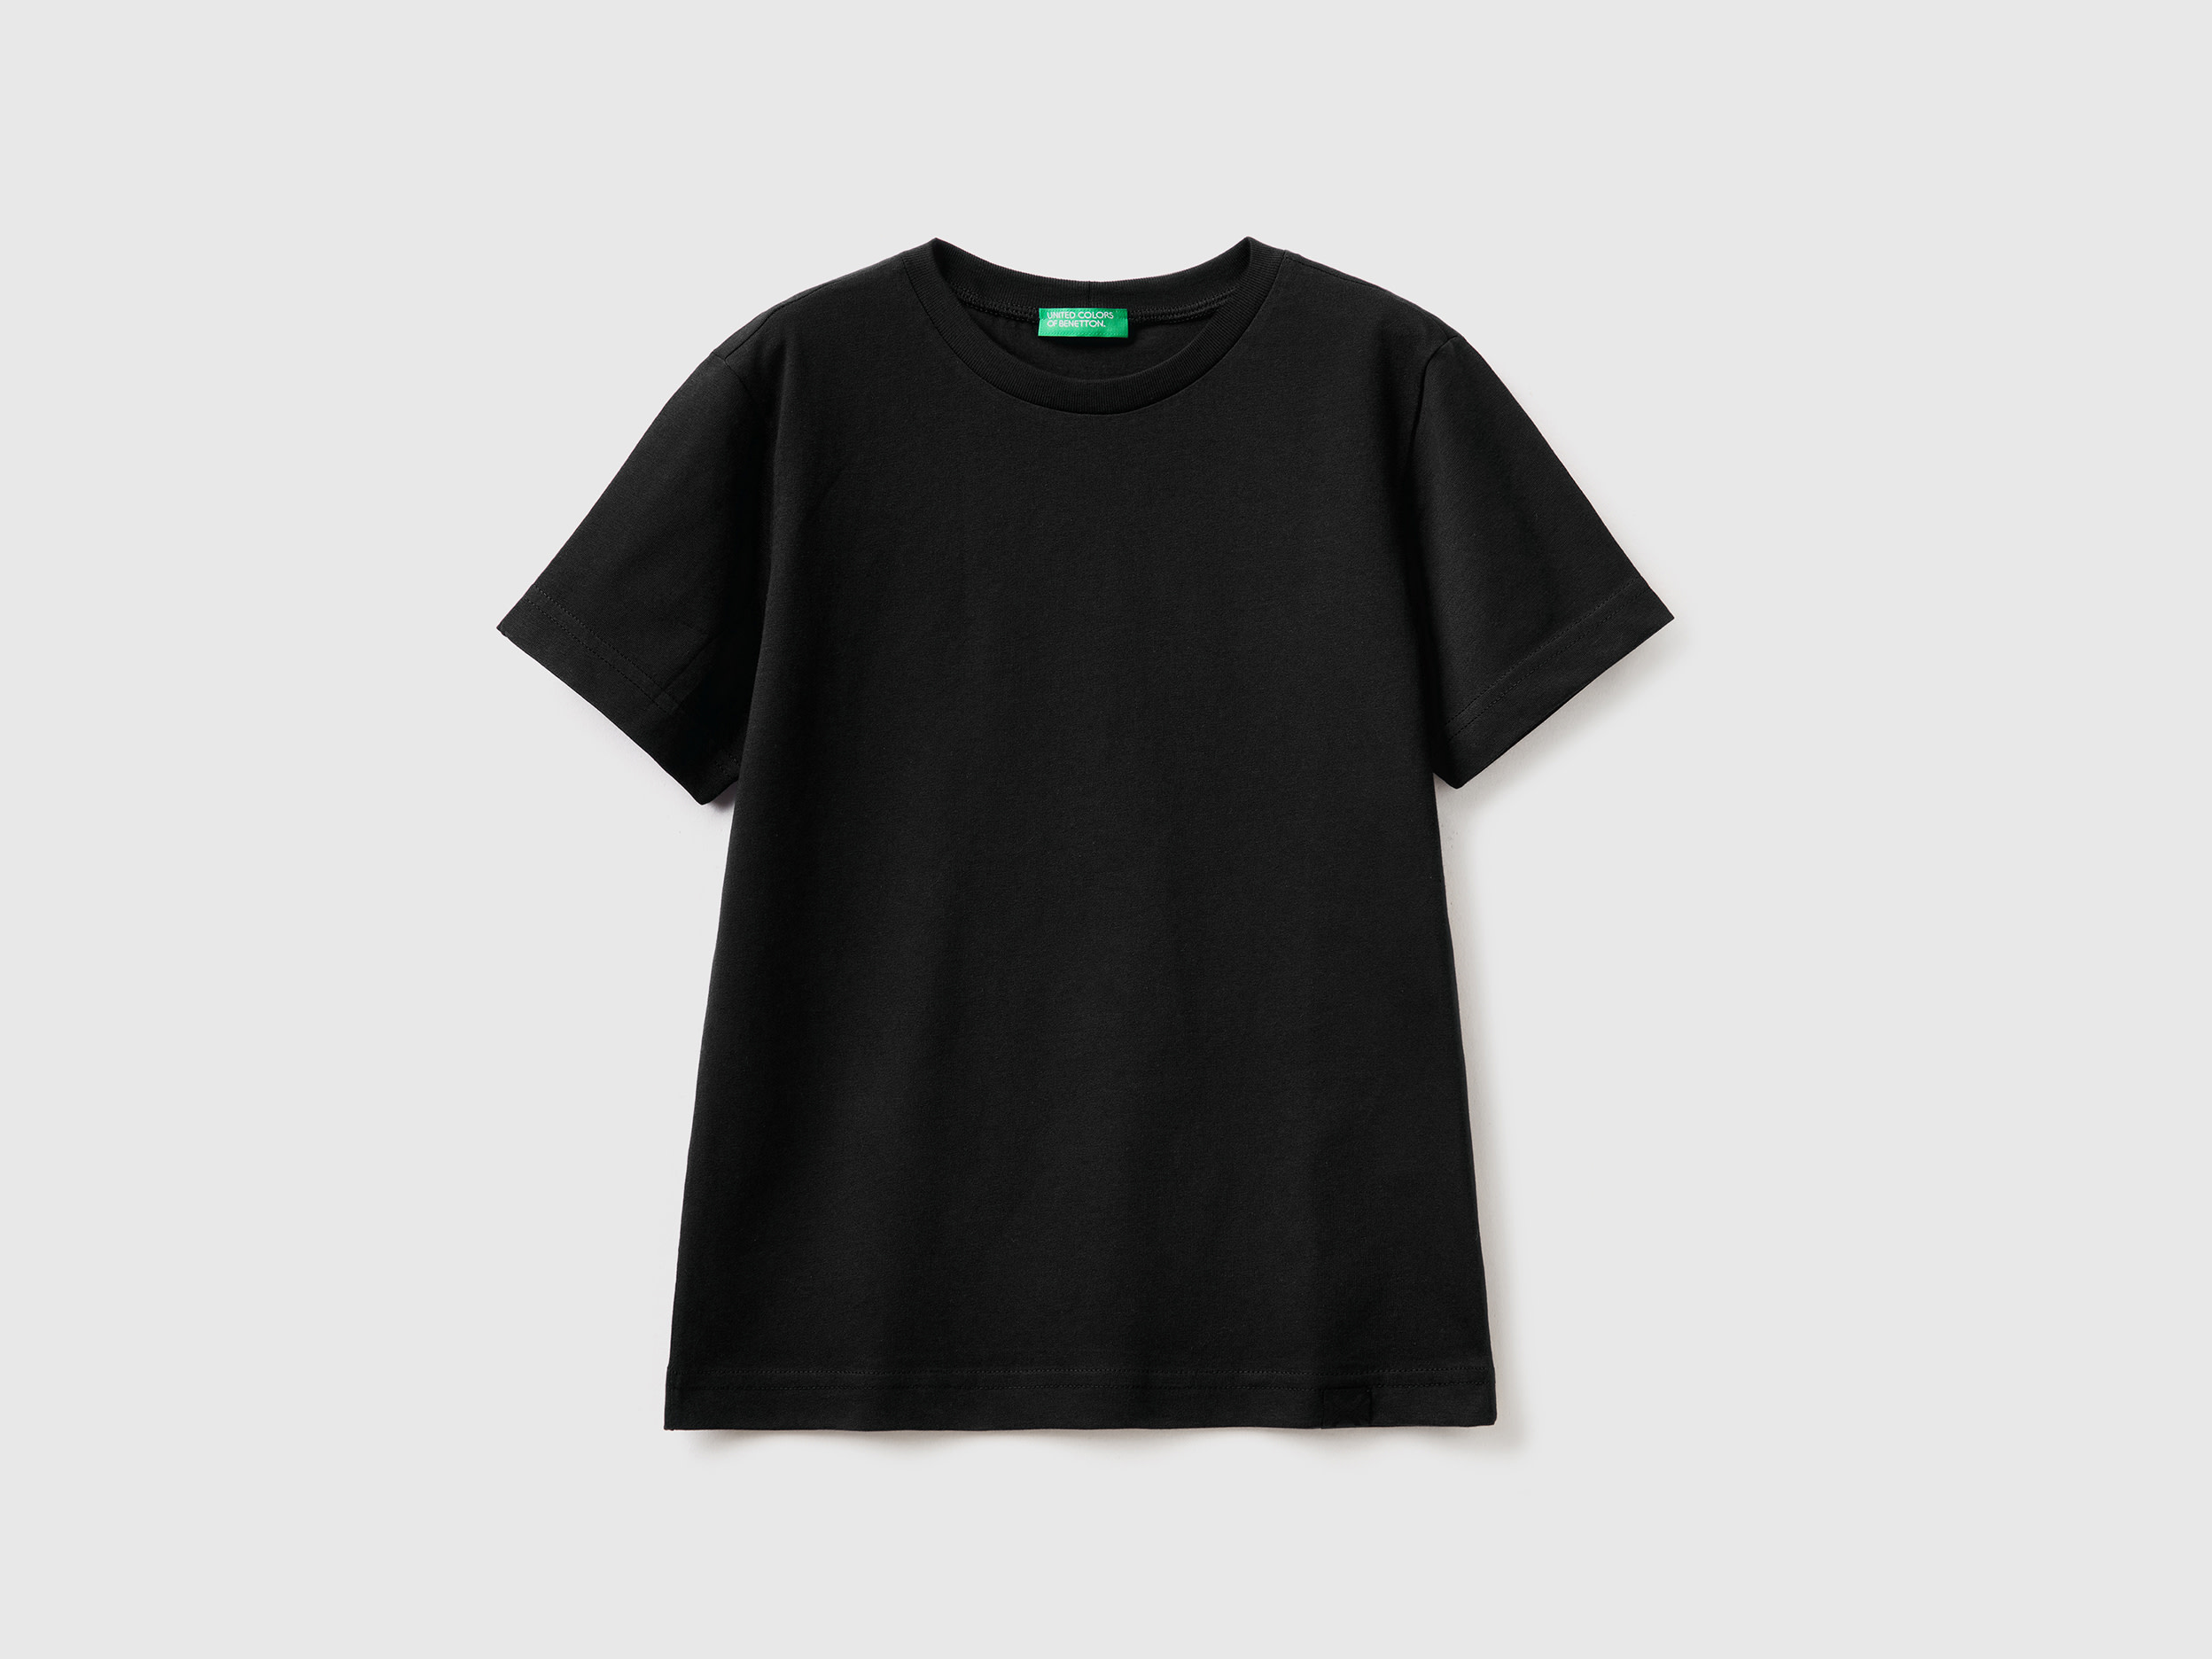 Benetton, Organic Cotton T-shirt, size 2XL, Black, Kids